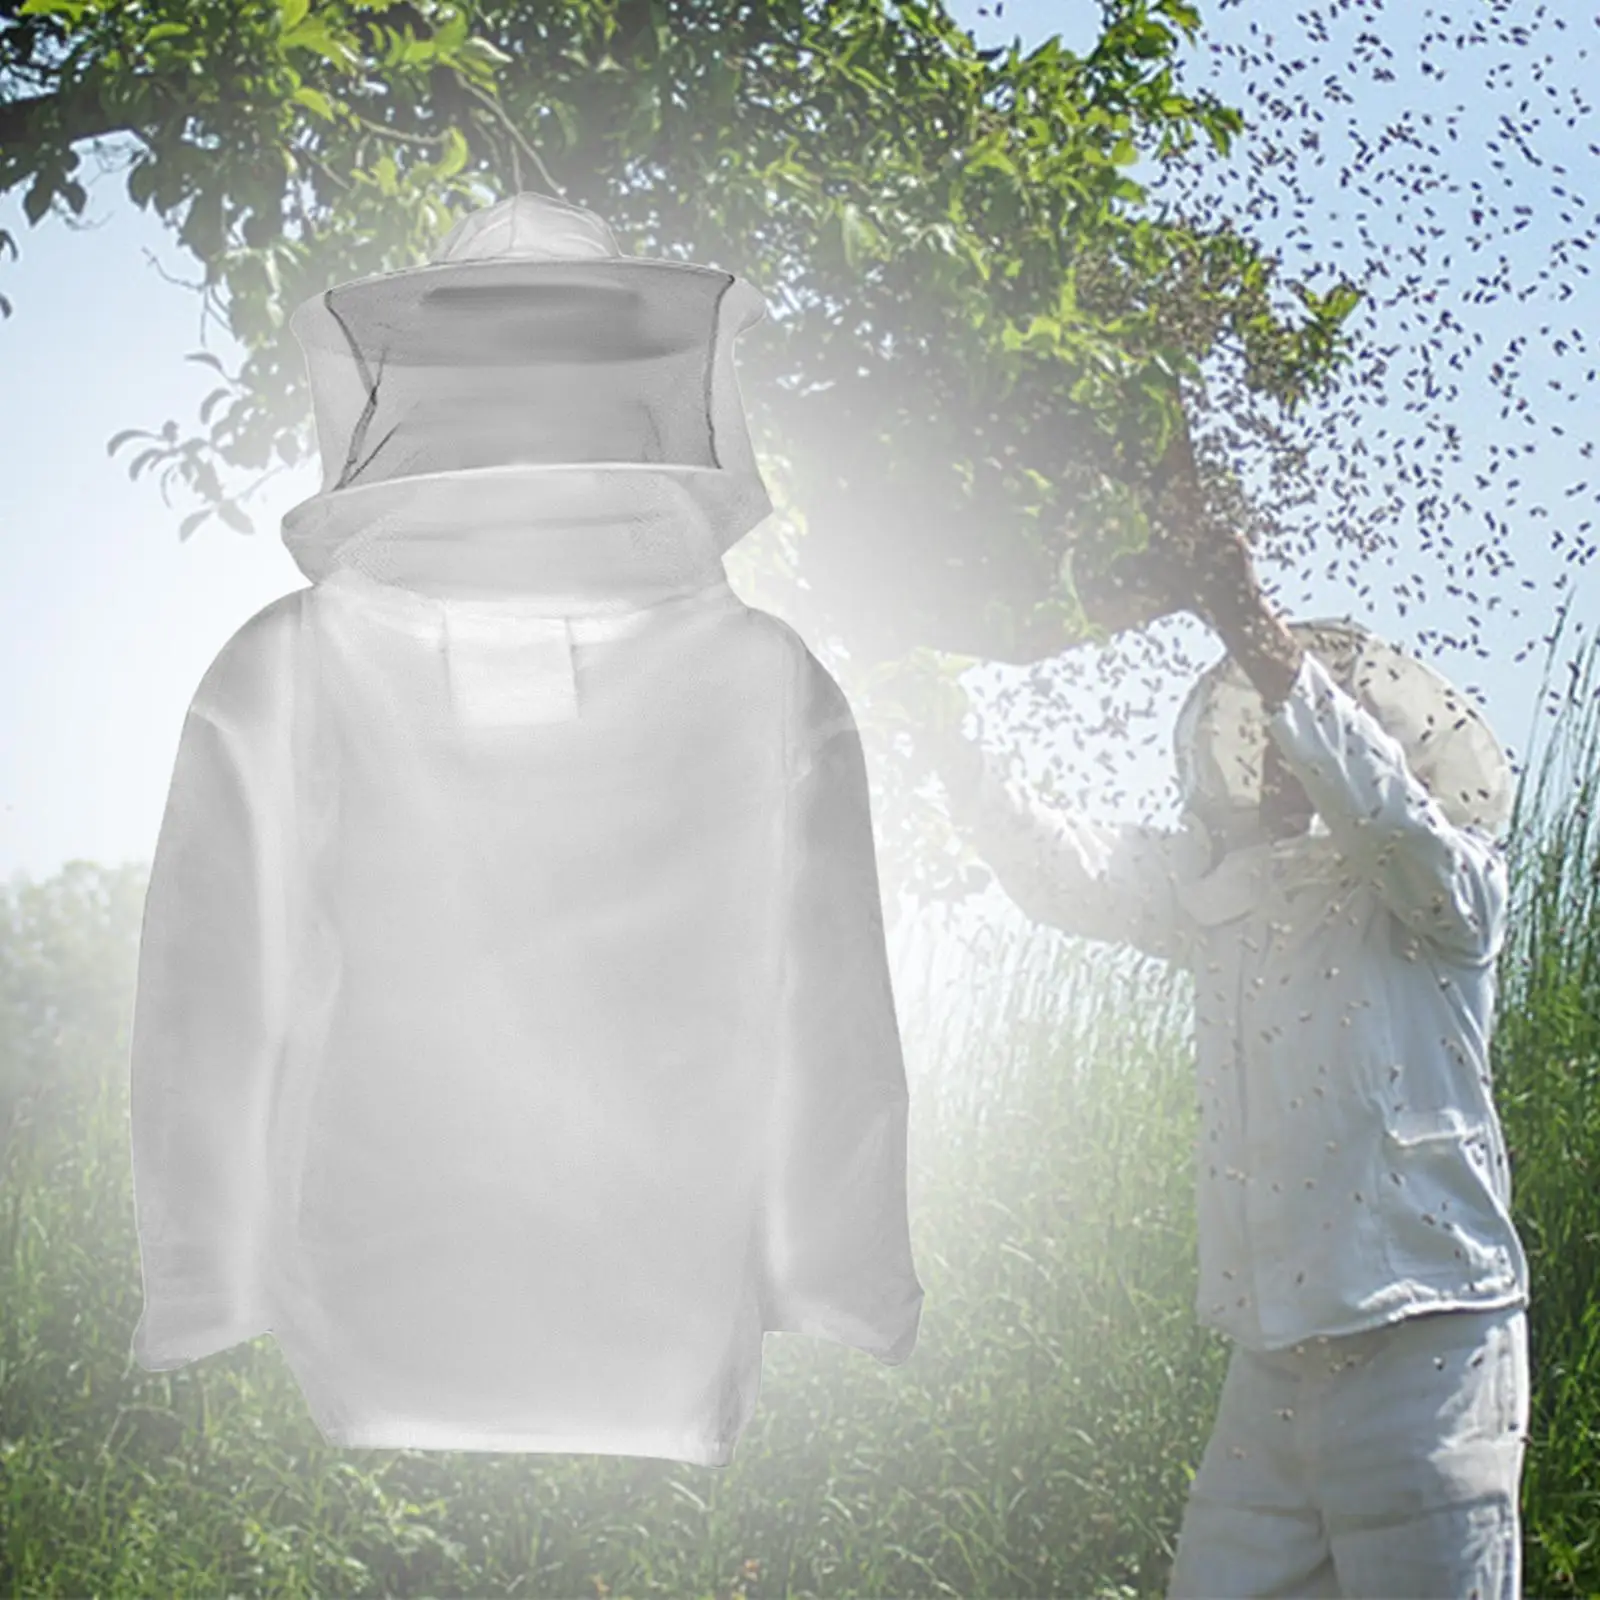 Bee Suit with Veil Hood Cotton Protective Equipment for Men Women Beekeeping Protective Suit for Commercial Beekeepers Beginner